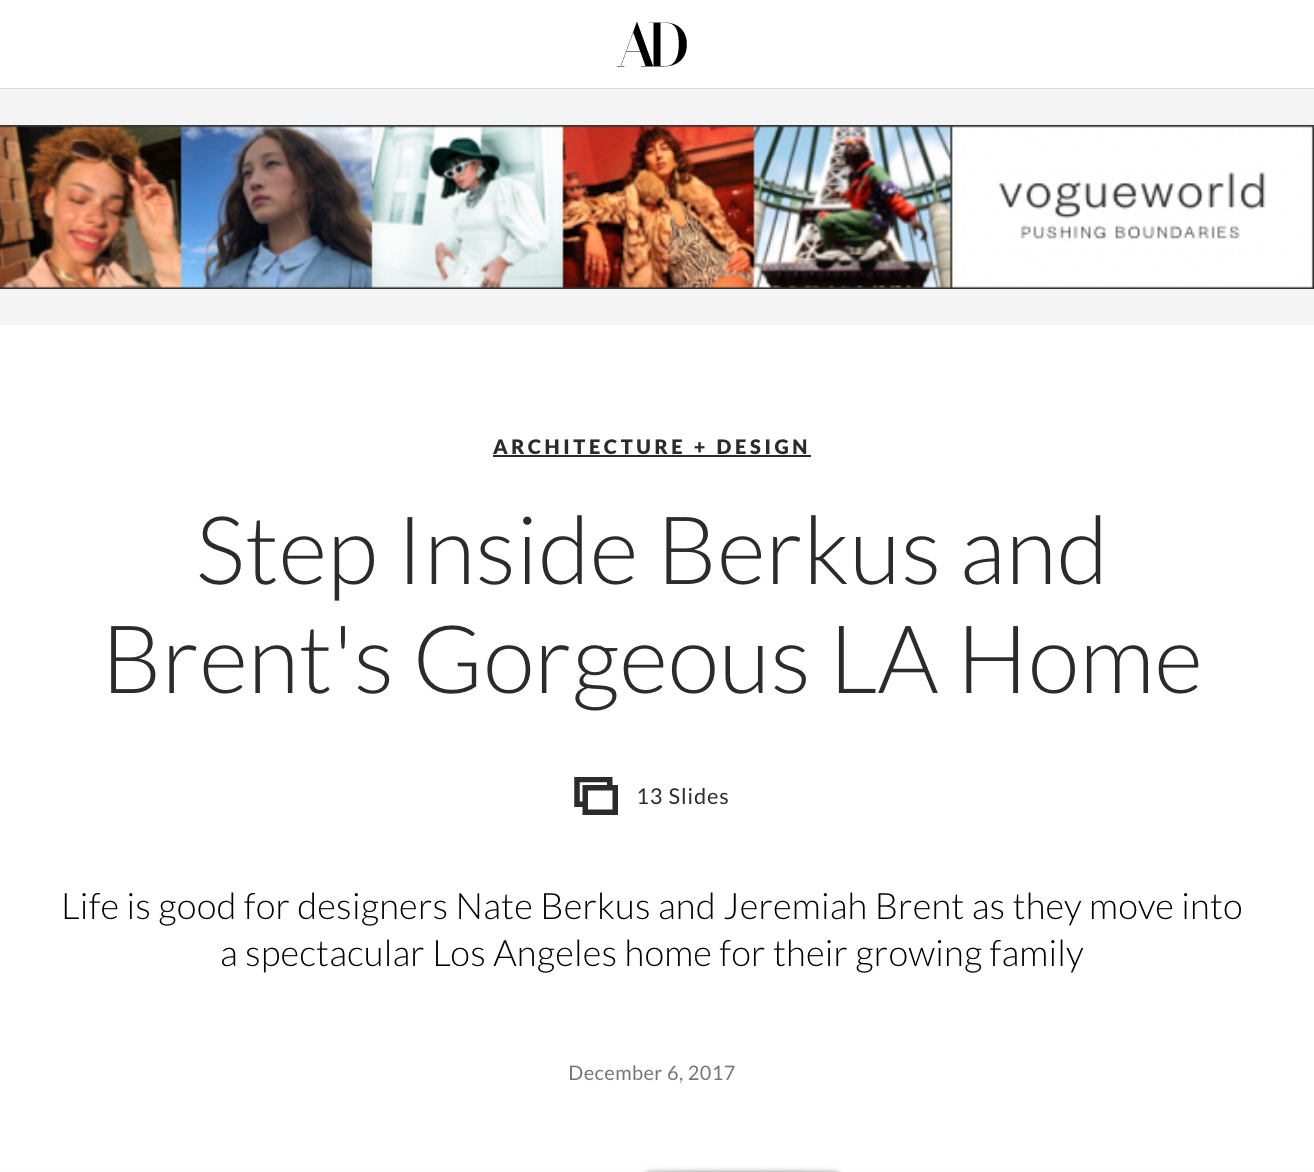 Step Inside Berkus and Brent's Gorgeous LA Home